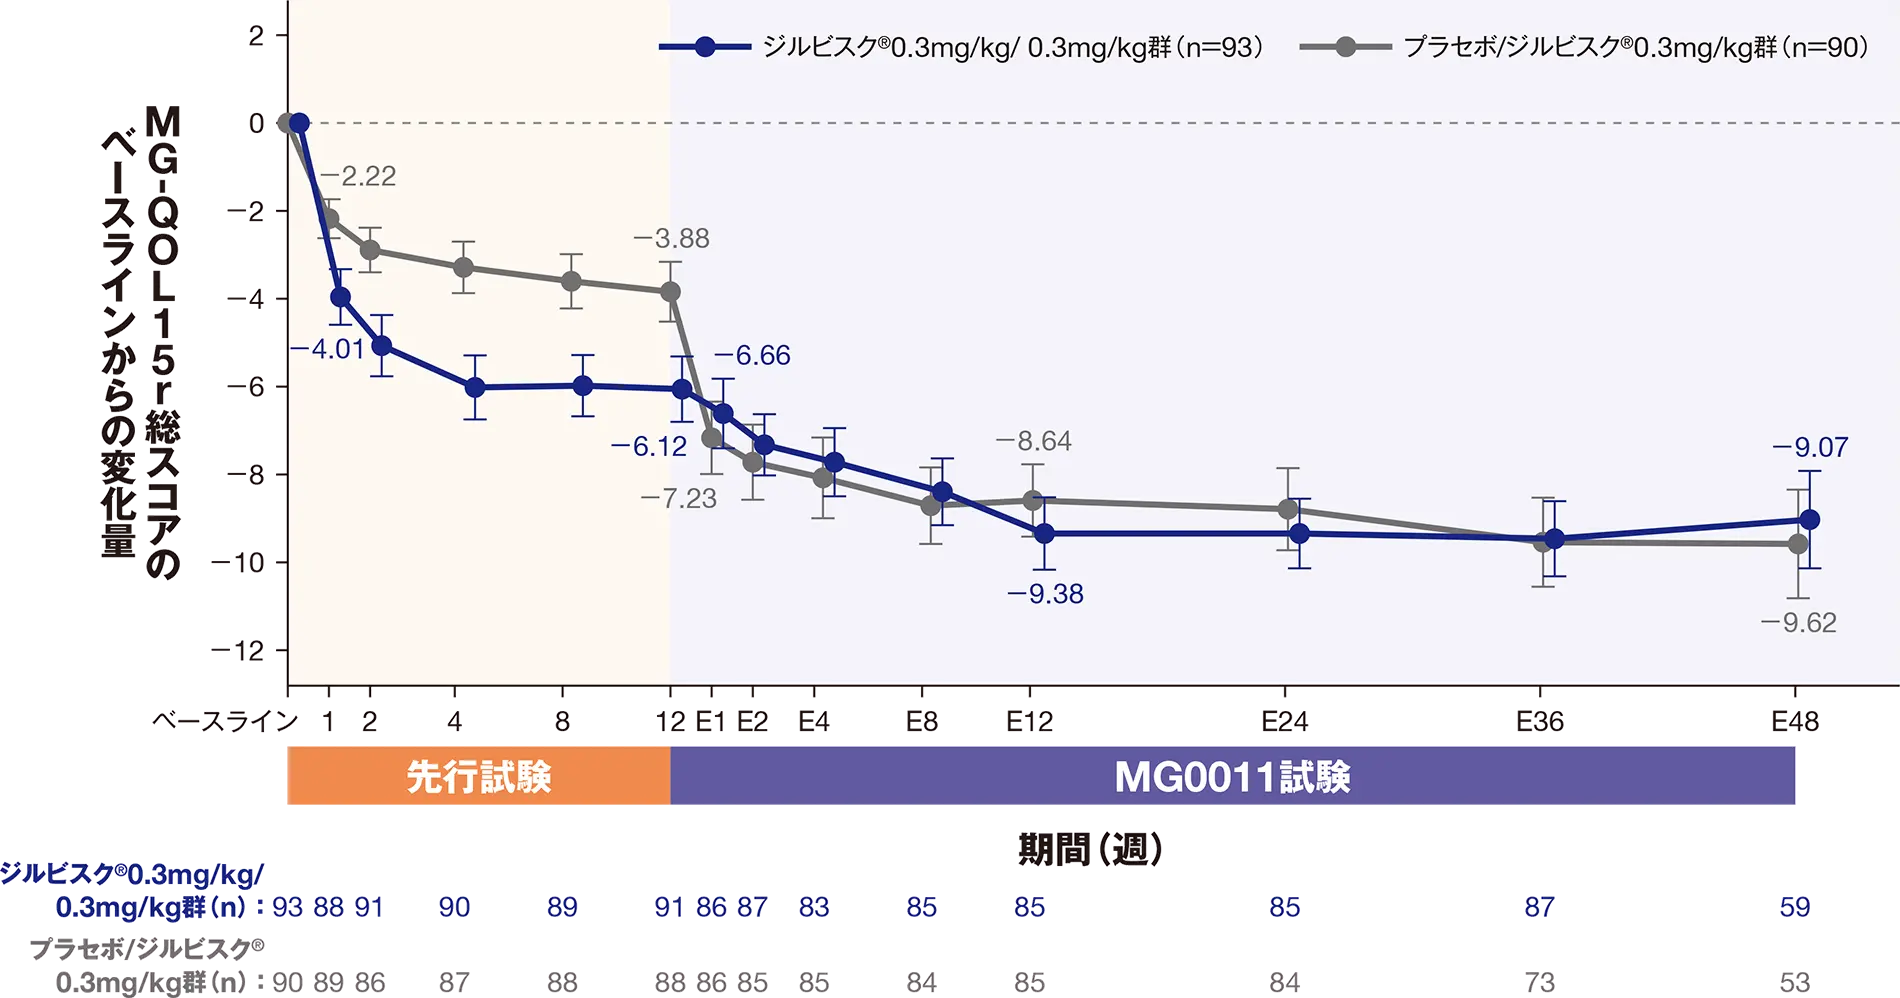 MG-QOL15r総スコアの先行試験のベースラインからの平均変化量（±SE）の推移（mITT）